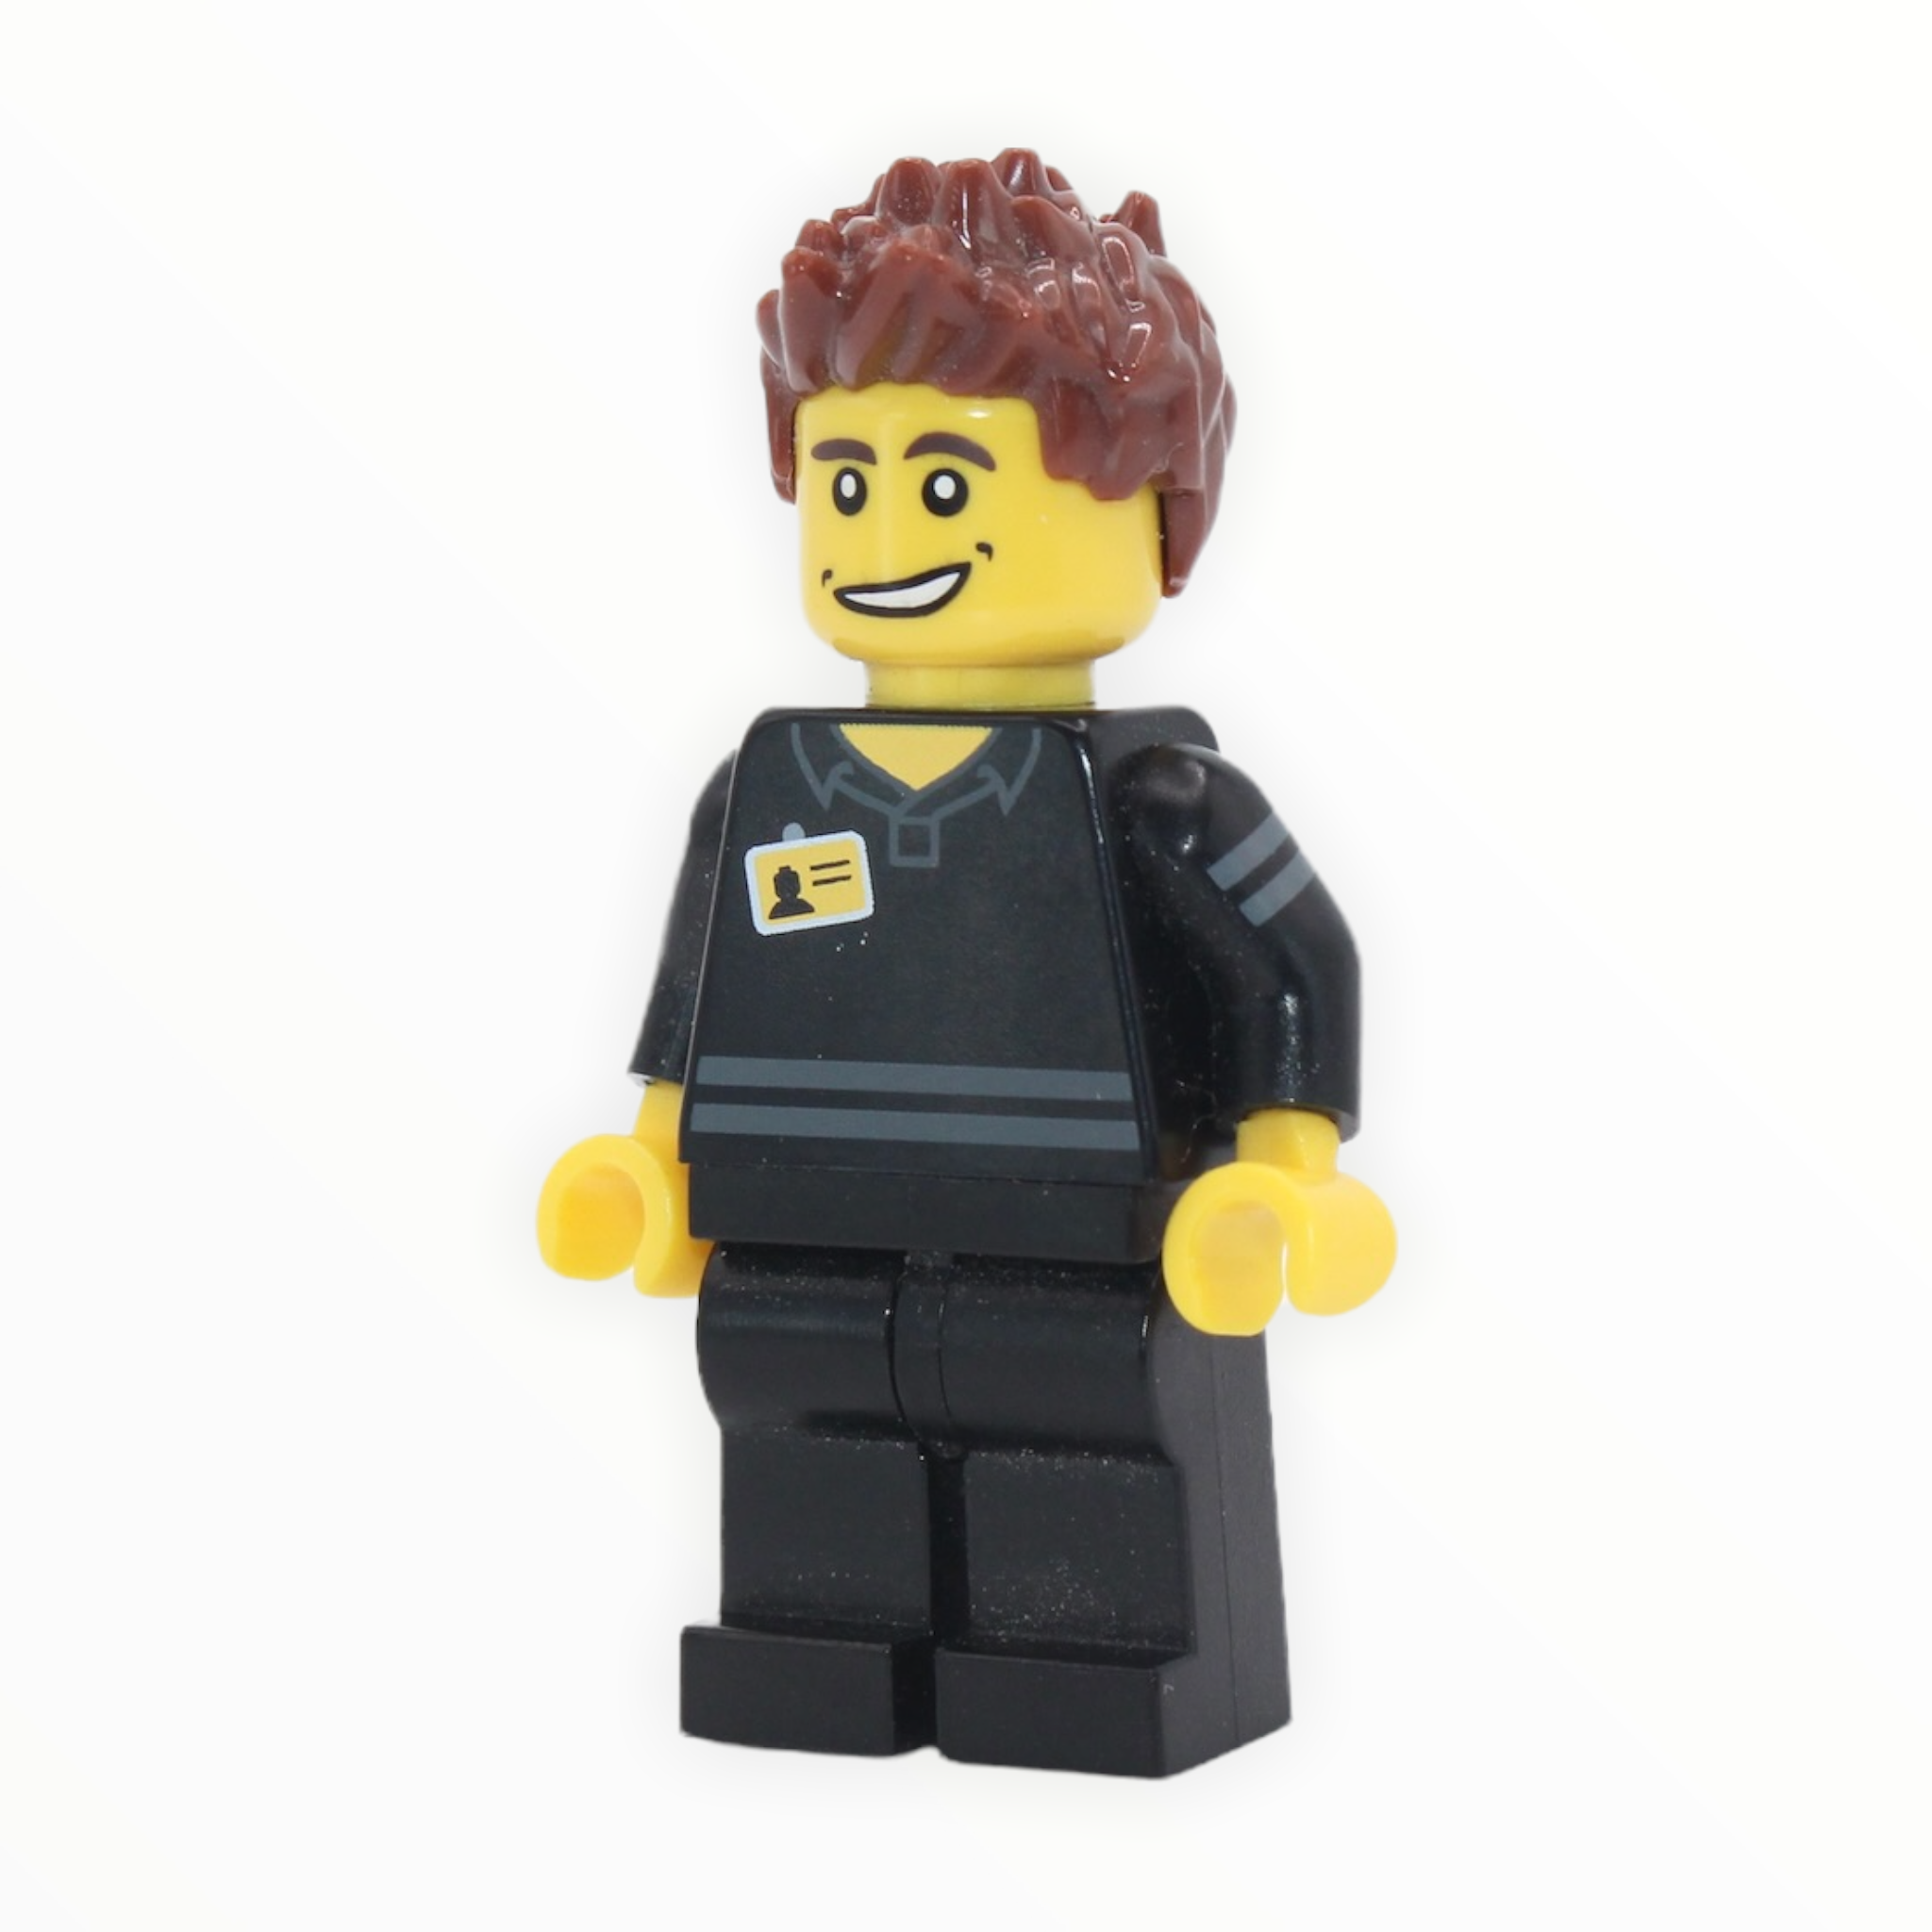 LEGO Brand Store Employee (plain black back)